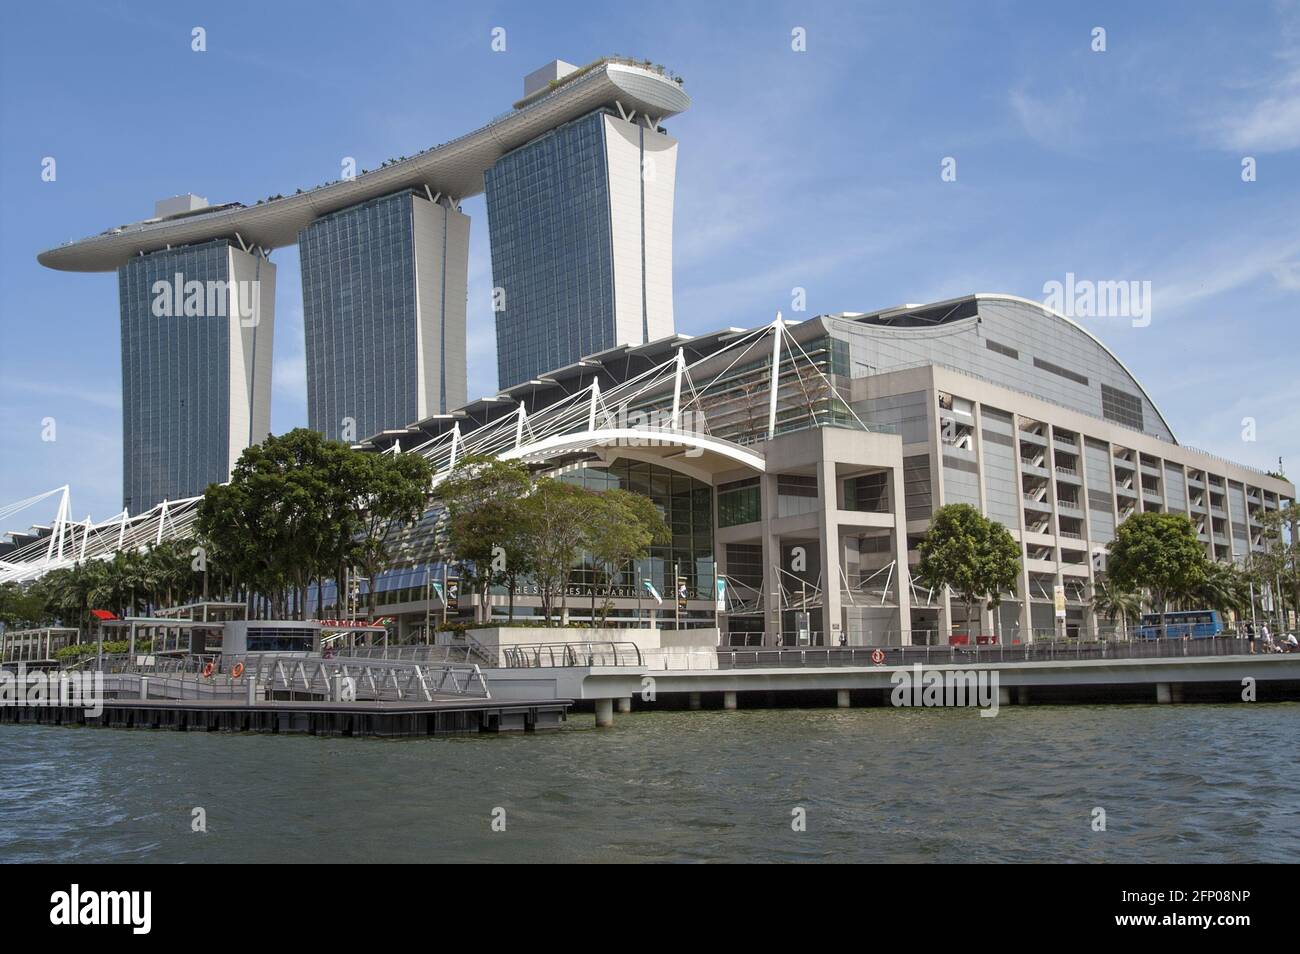 Singapore, Singapur, Asia, Asien; Luxury Marina Bay Sands Hotel and Casino; Luxuriöses Hotel und Casino; 濱海灣金沙酒店 Luksusowy hotel i kasyno Stock Photo